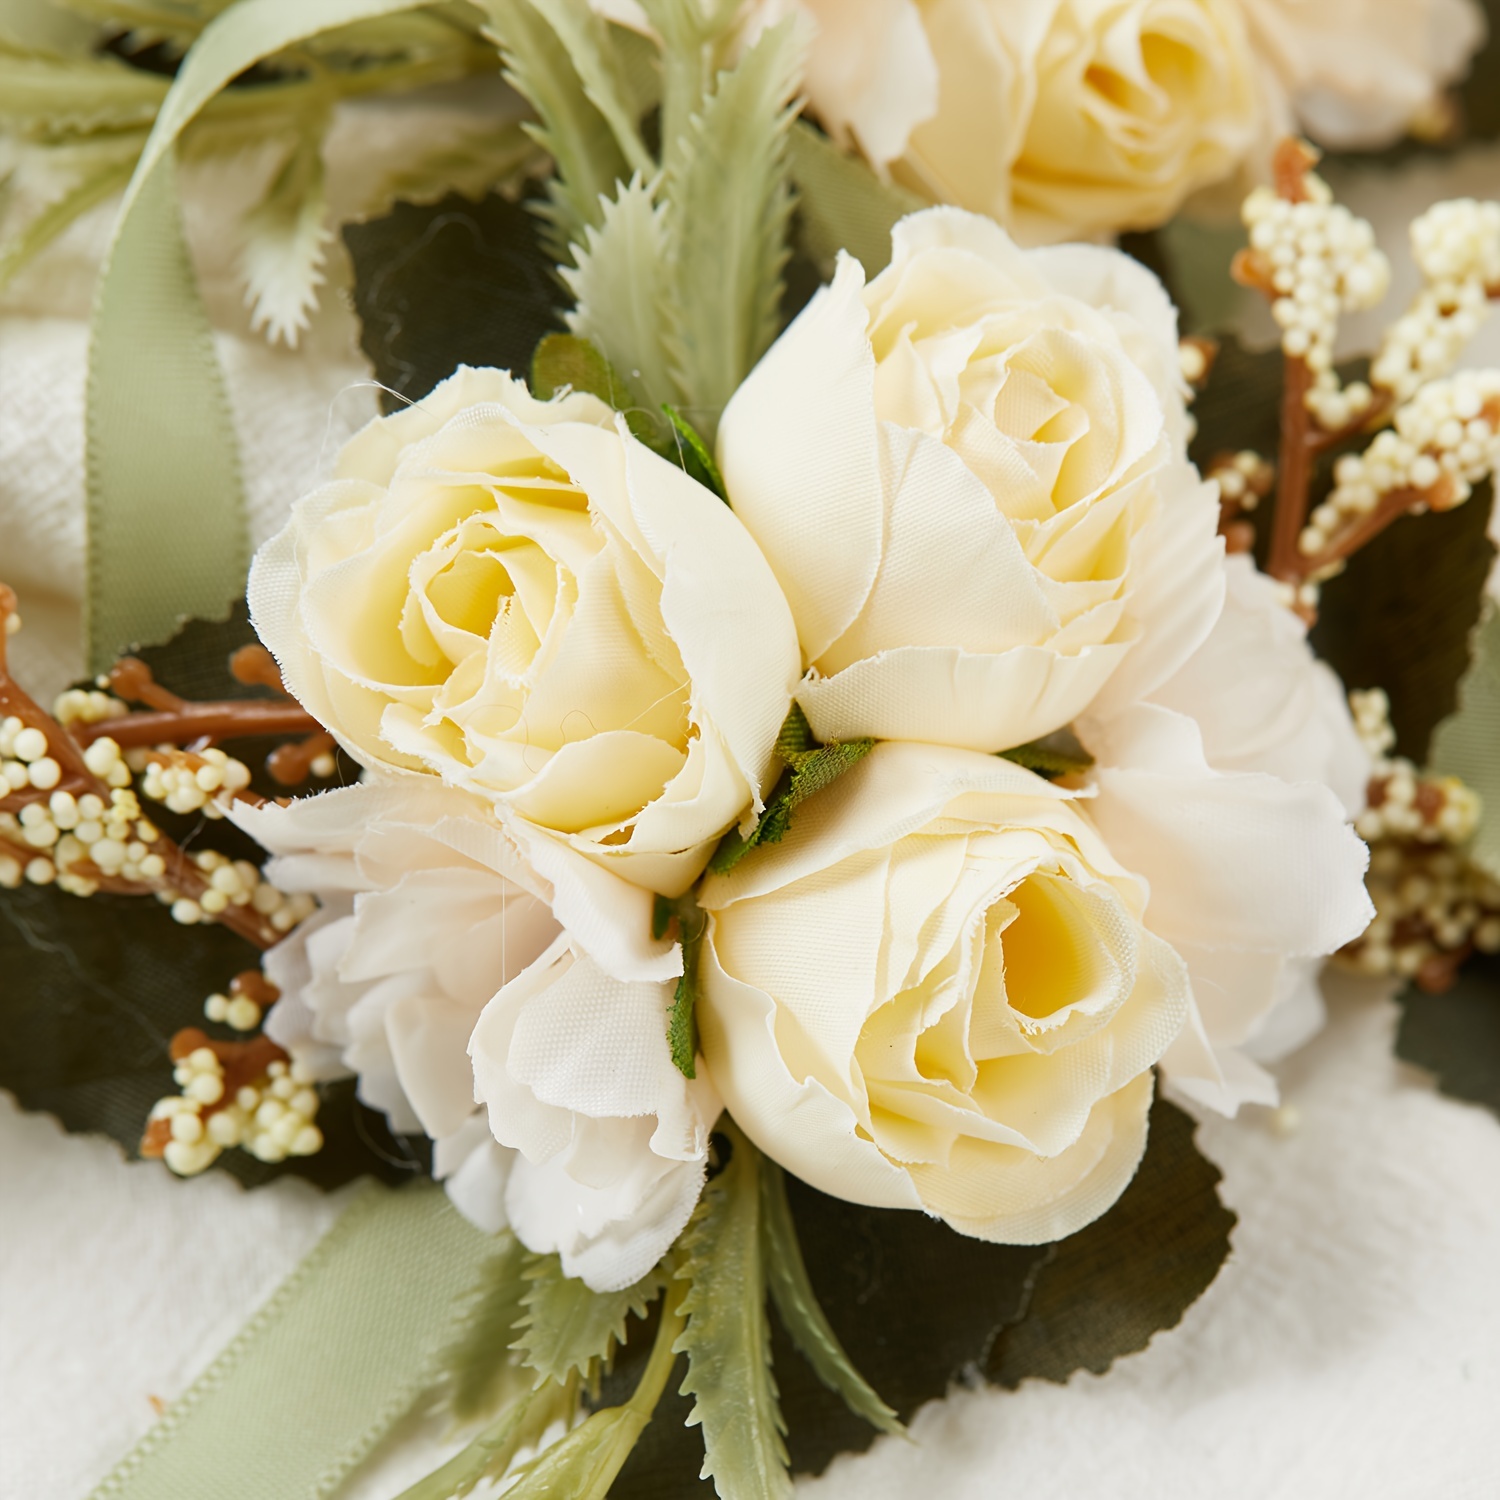 Rustic Wedding Wrist Corsage White Green Prom Flower Bracelet 